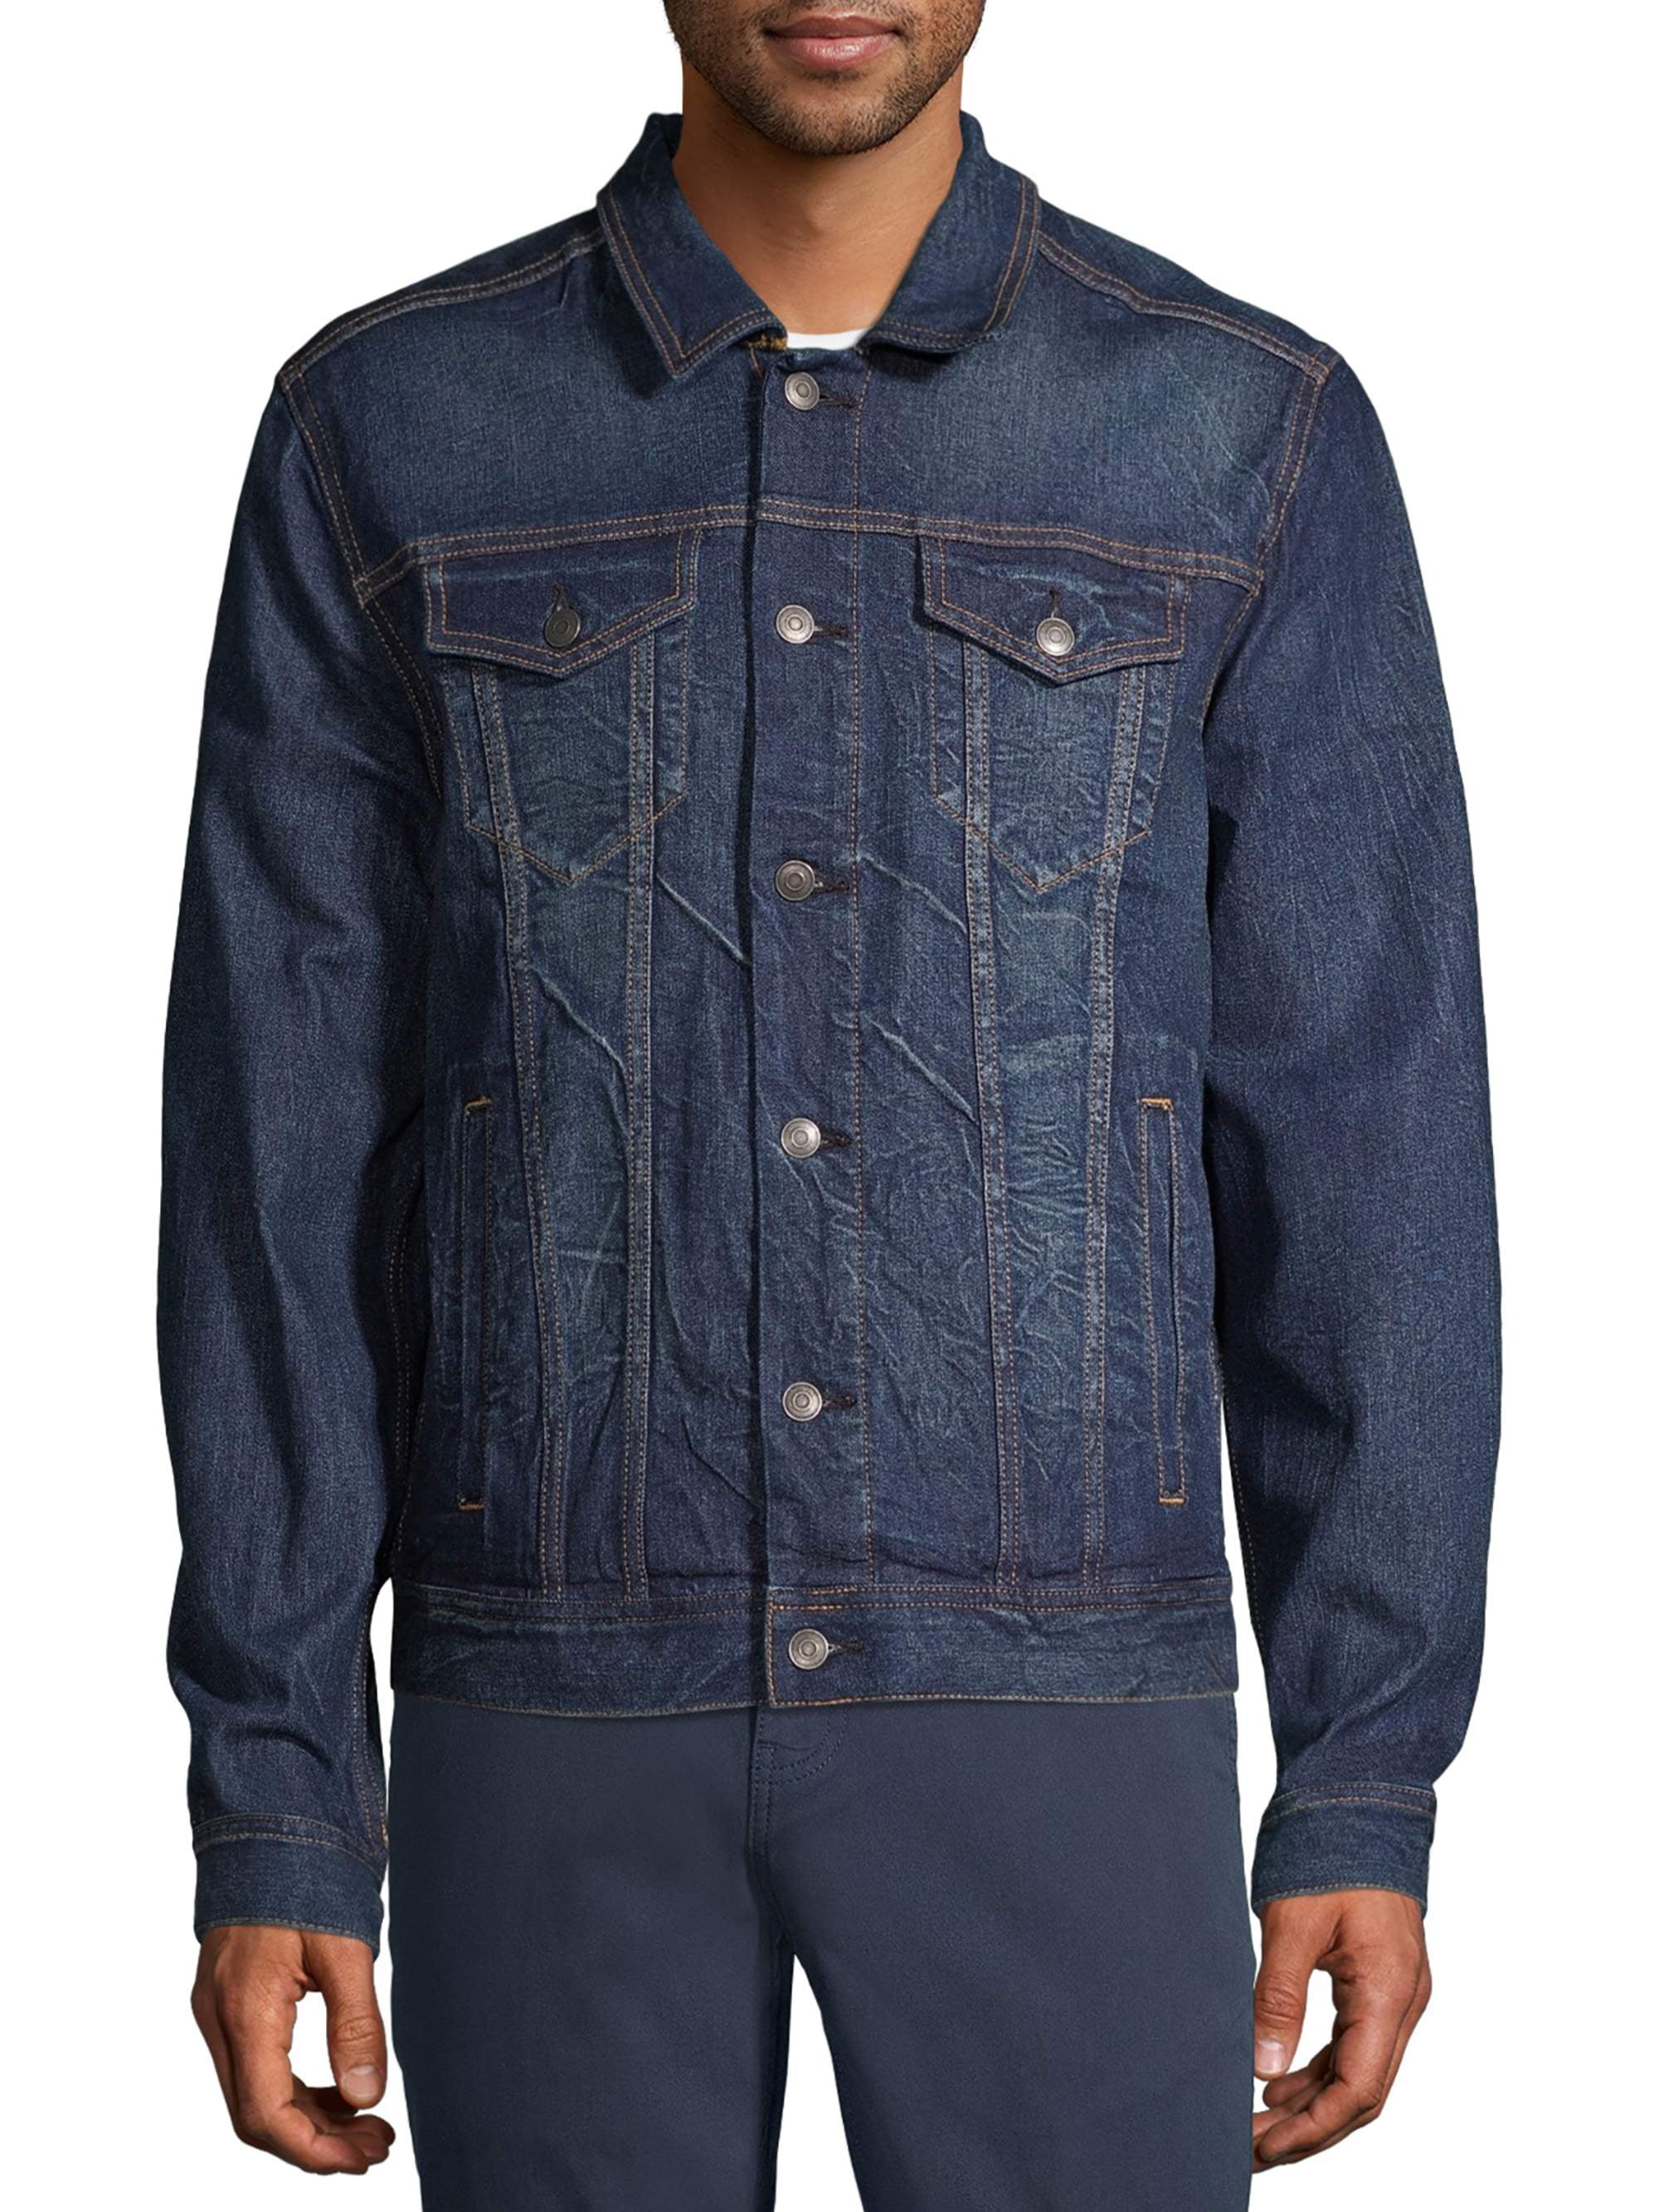 George Men's and Big Men's Denim Jacket, up to Size 5XL - Walmart.com